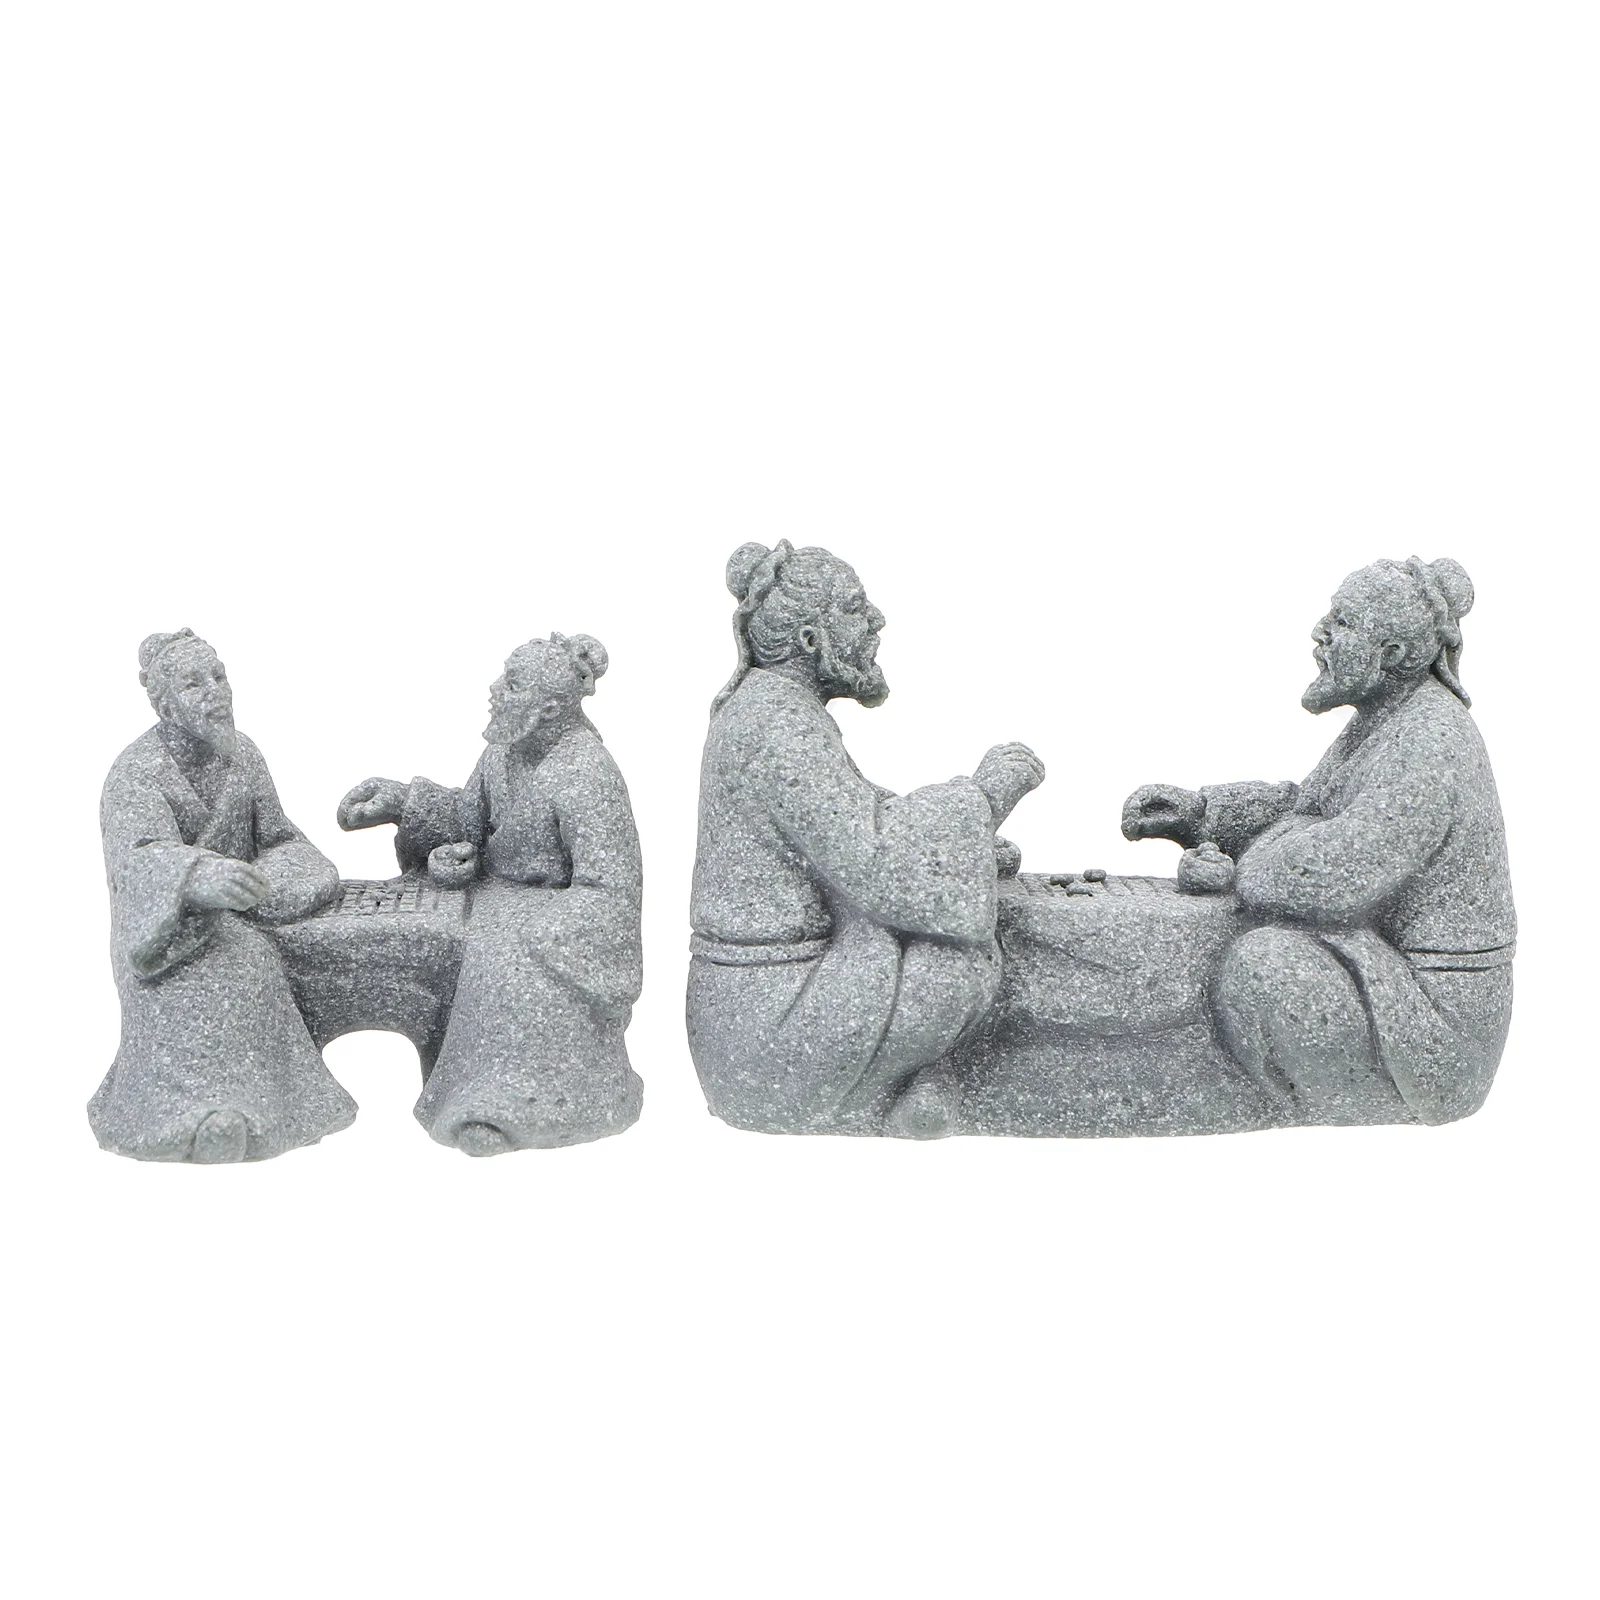 2 Pcs Miniature Fisherman Figurine Sand Garden Accessories Fairy Figurines Bonsai Ceramic Village Scene Crafts Home Décor